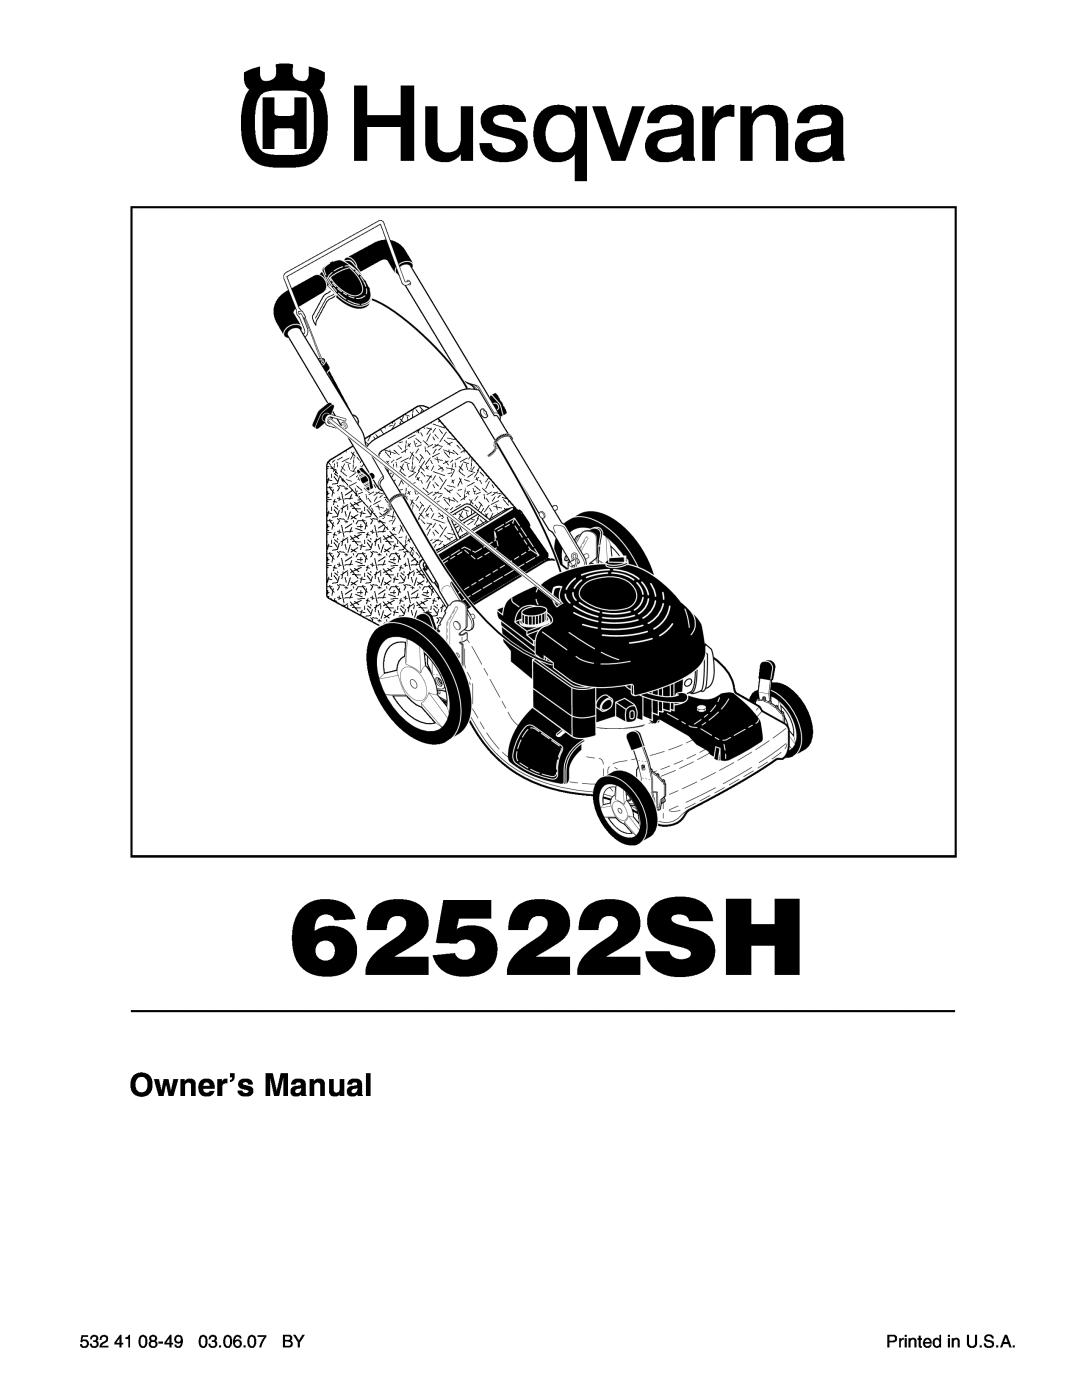 Husqvarna 62522SH owner manual 